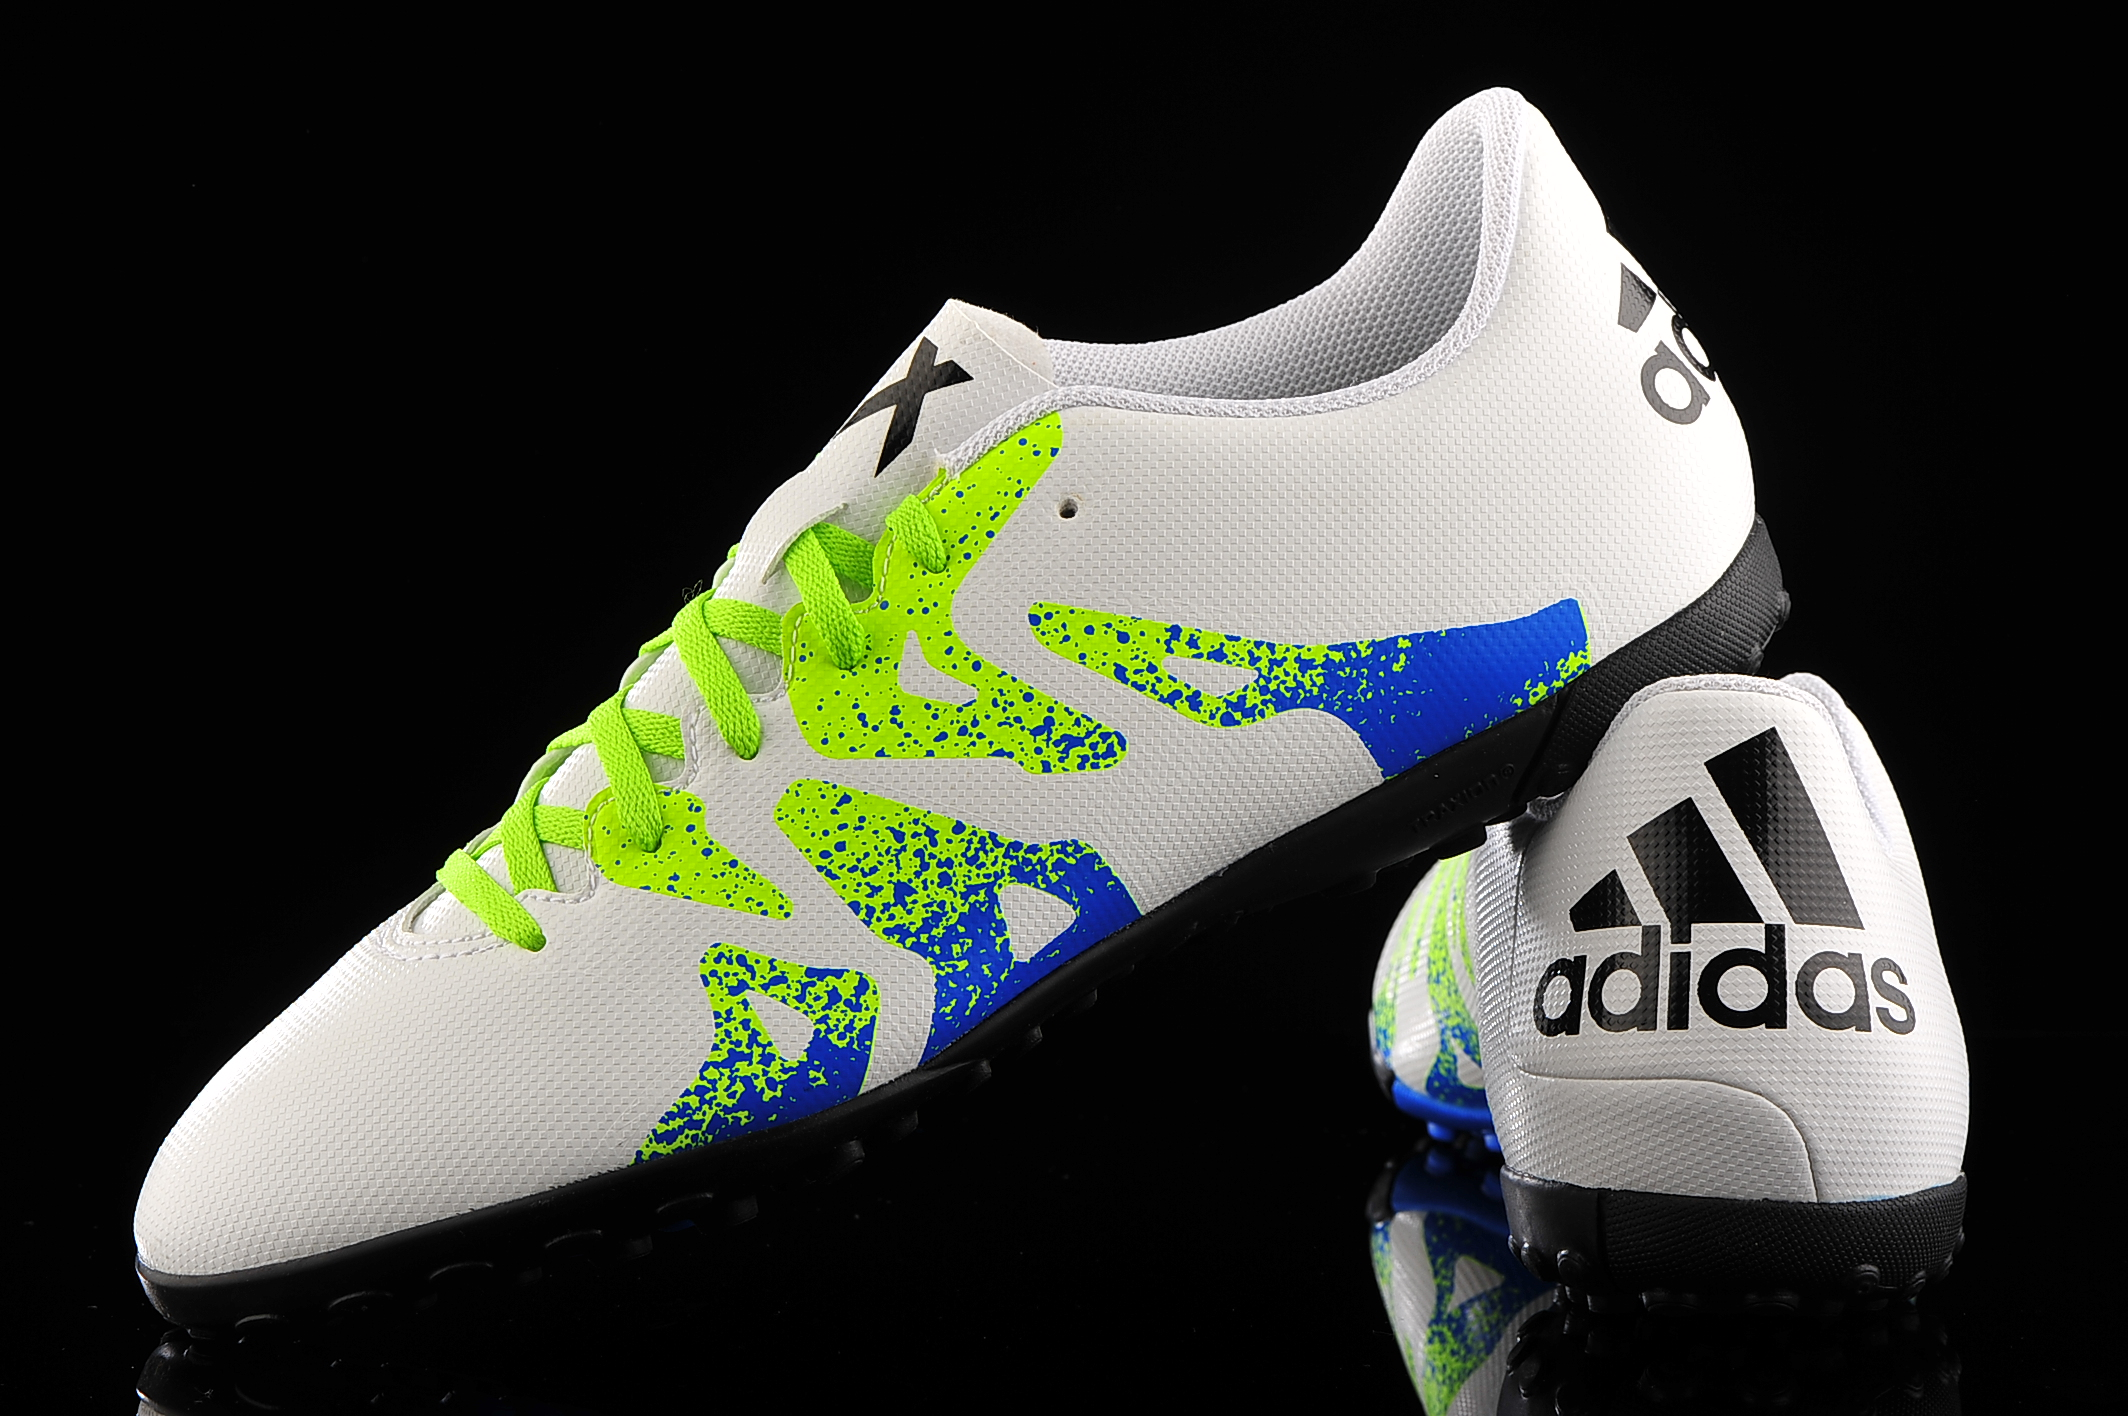 adidas X 15.4 S74610 | R-GOL.com - Football boots & equipment